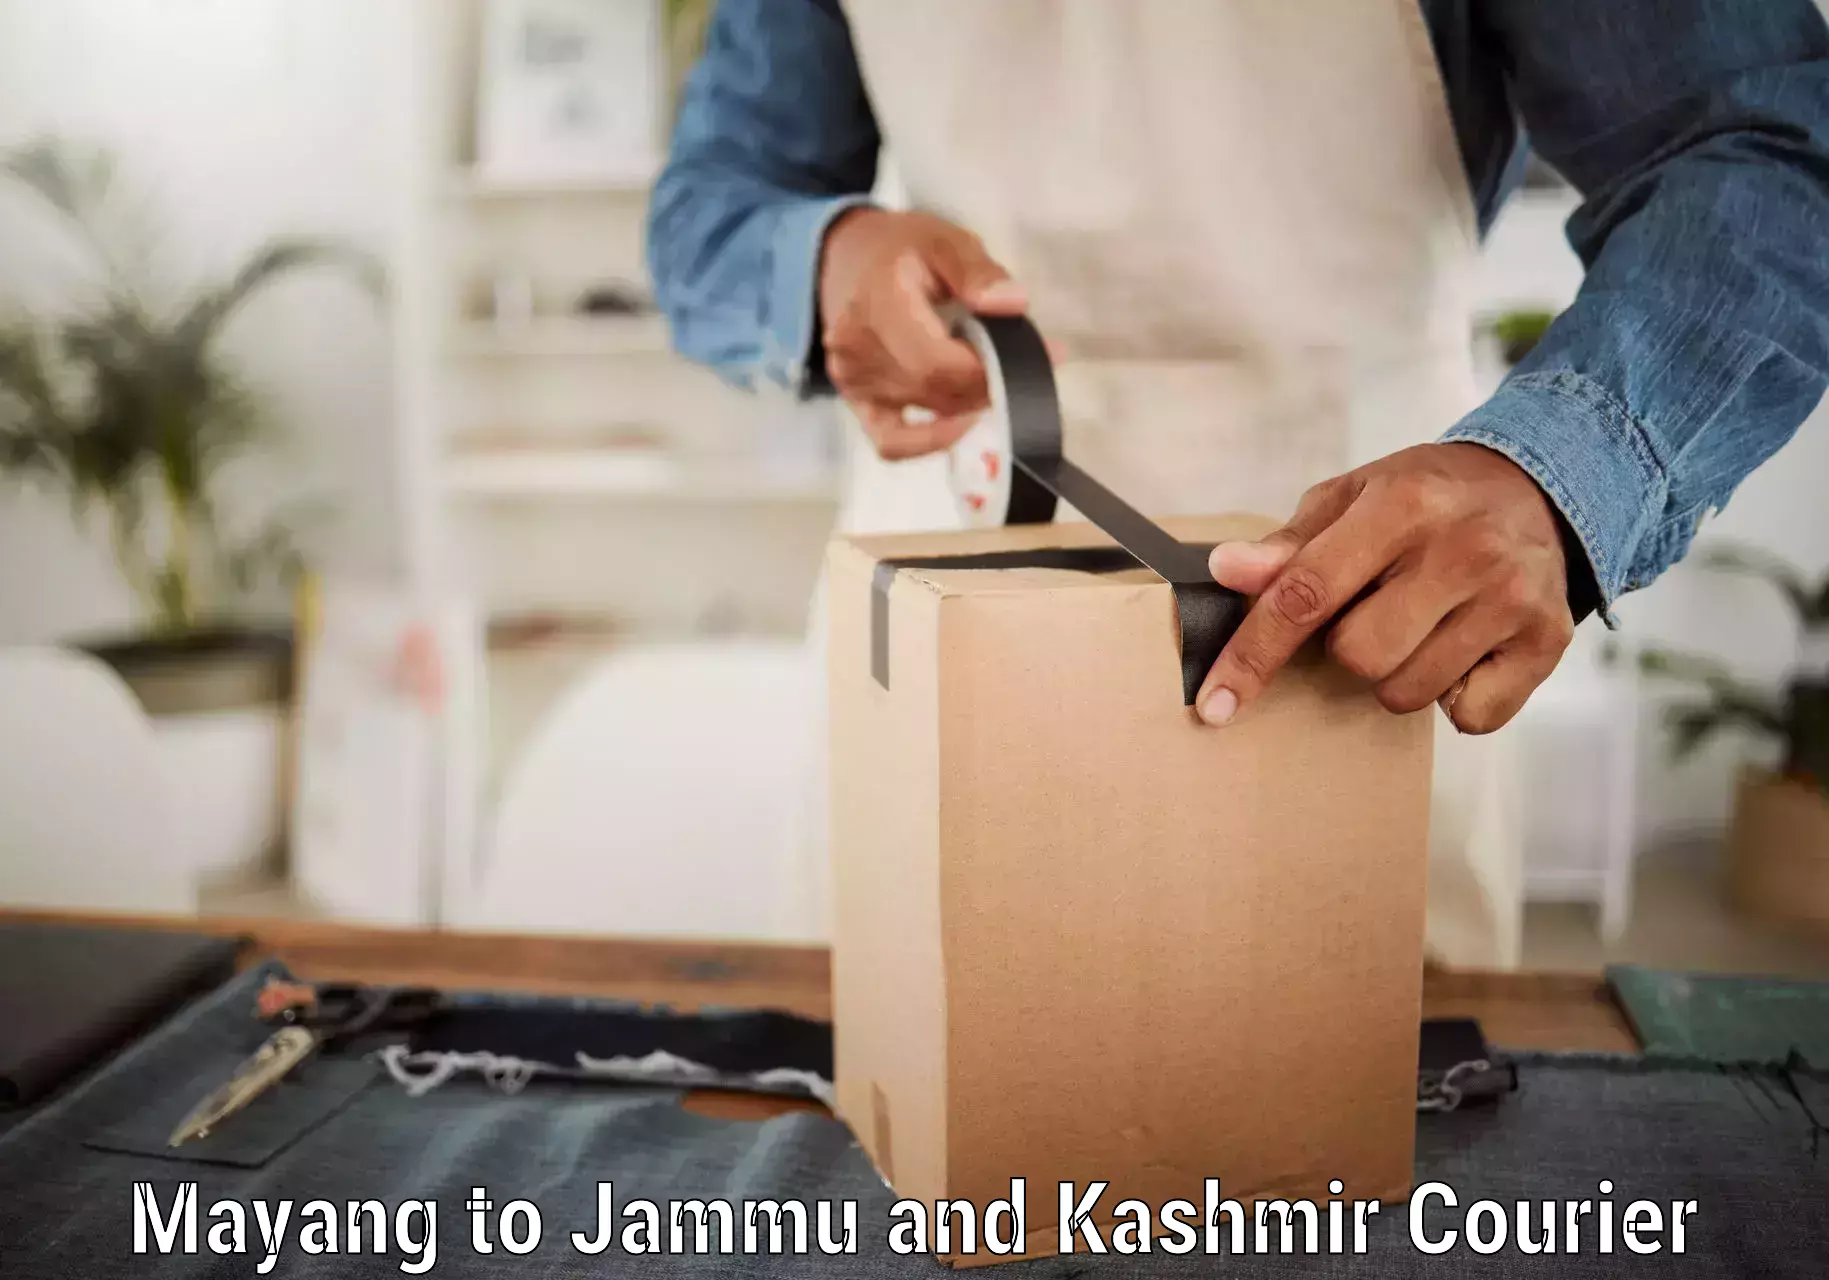 Courier service efficiency in Mayang to Srinagar Kashmir